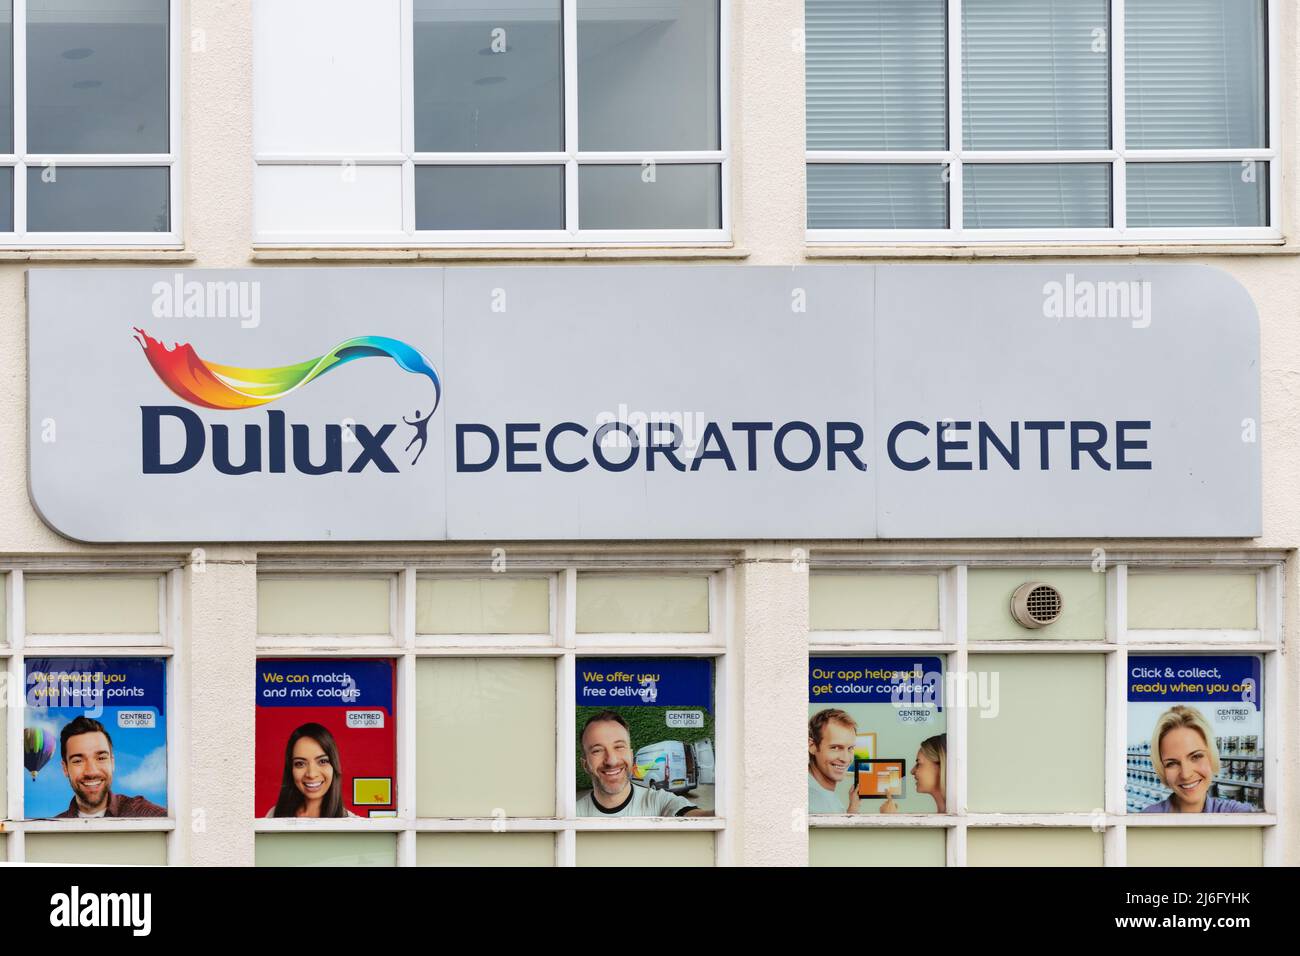 Dulus Decorator Centre sign, Leeds Stock Photo